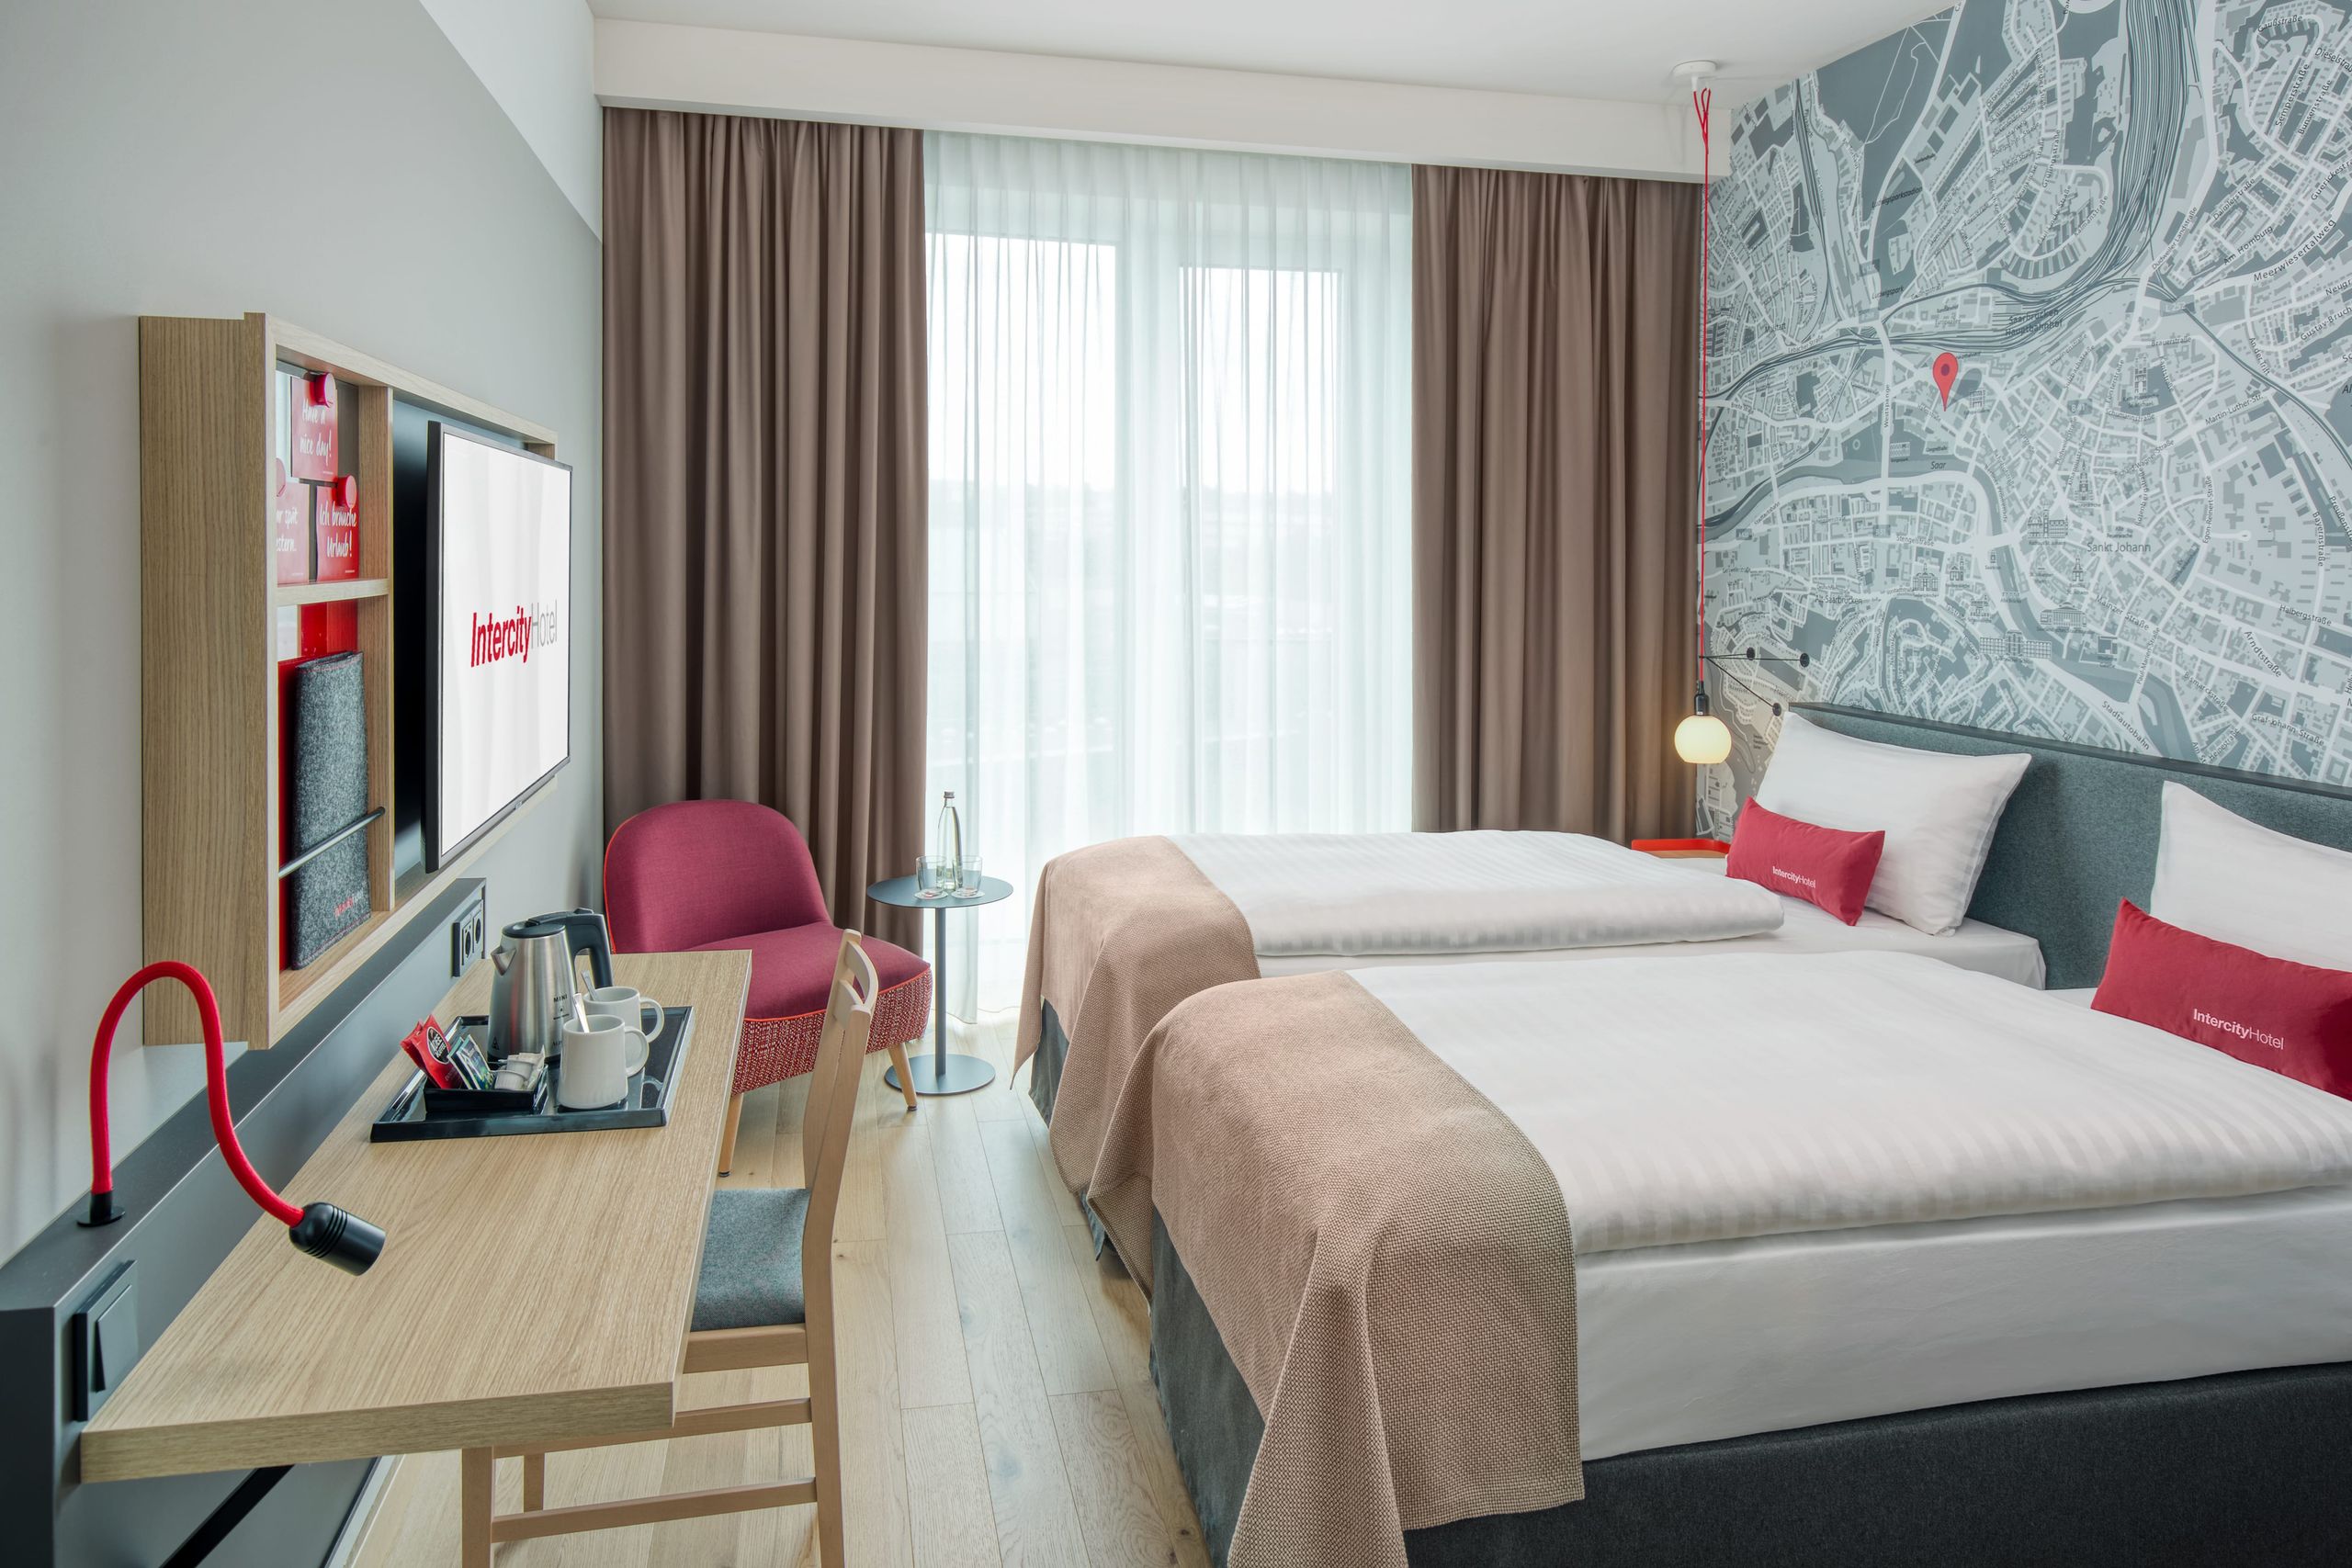 Hotel in Saarbrücken | IntercityHotel Saarbrücken - Superior room with two separate beds